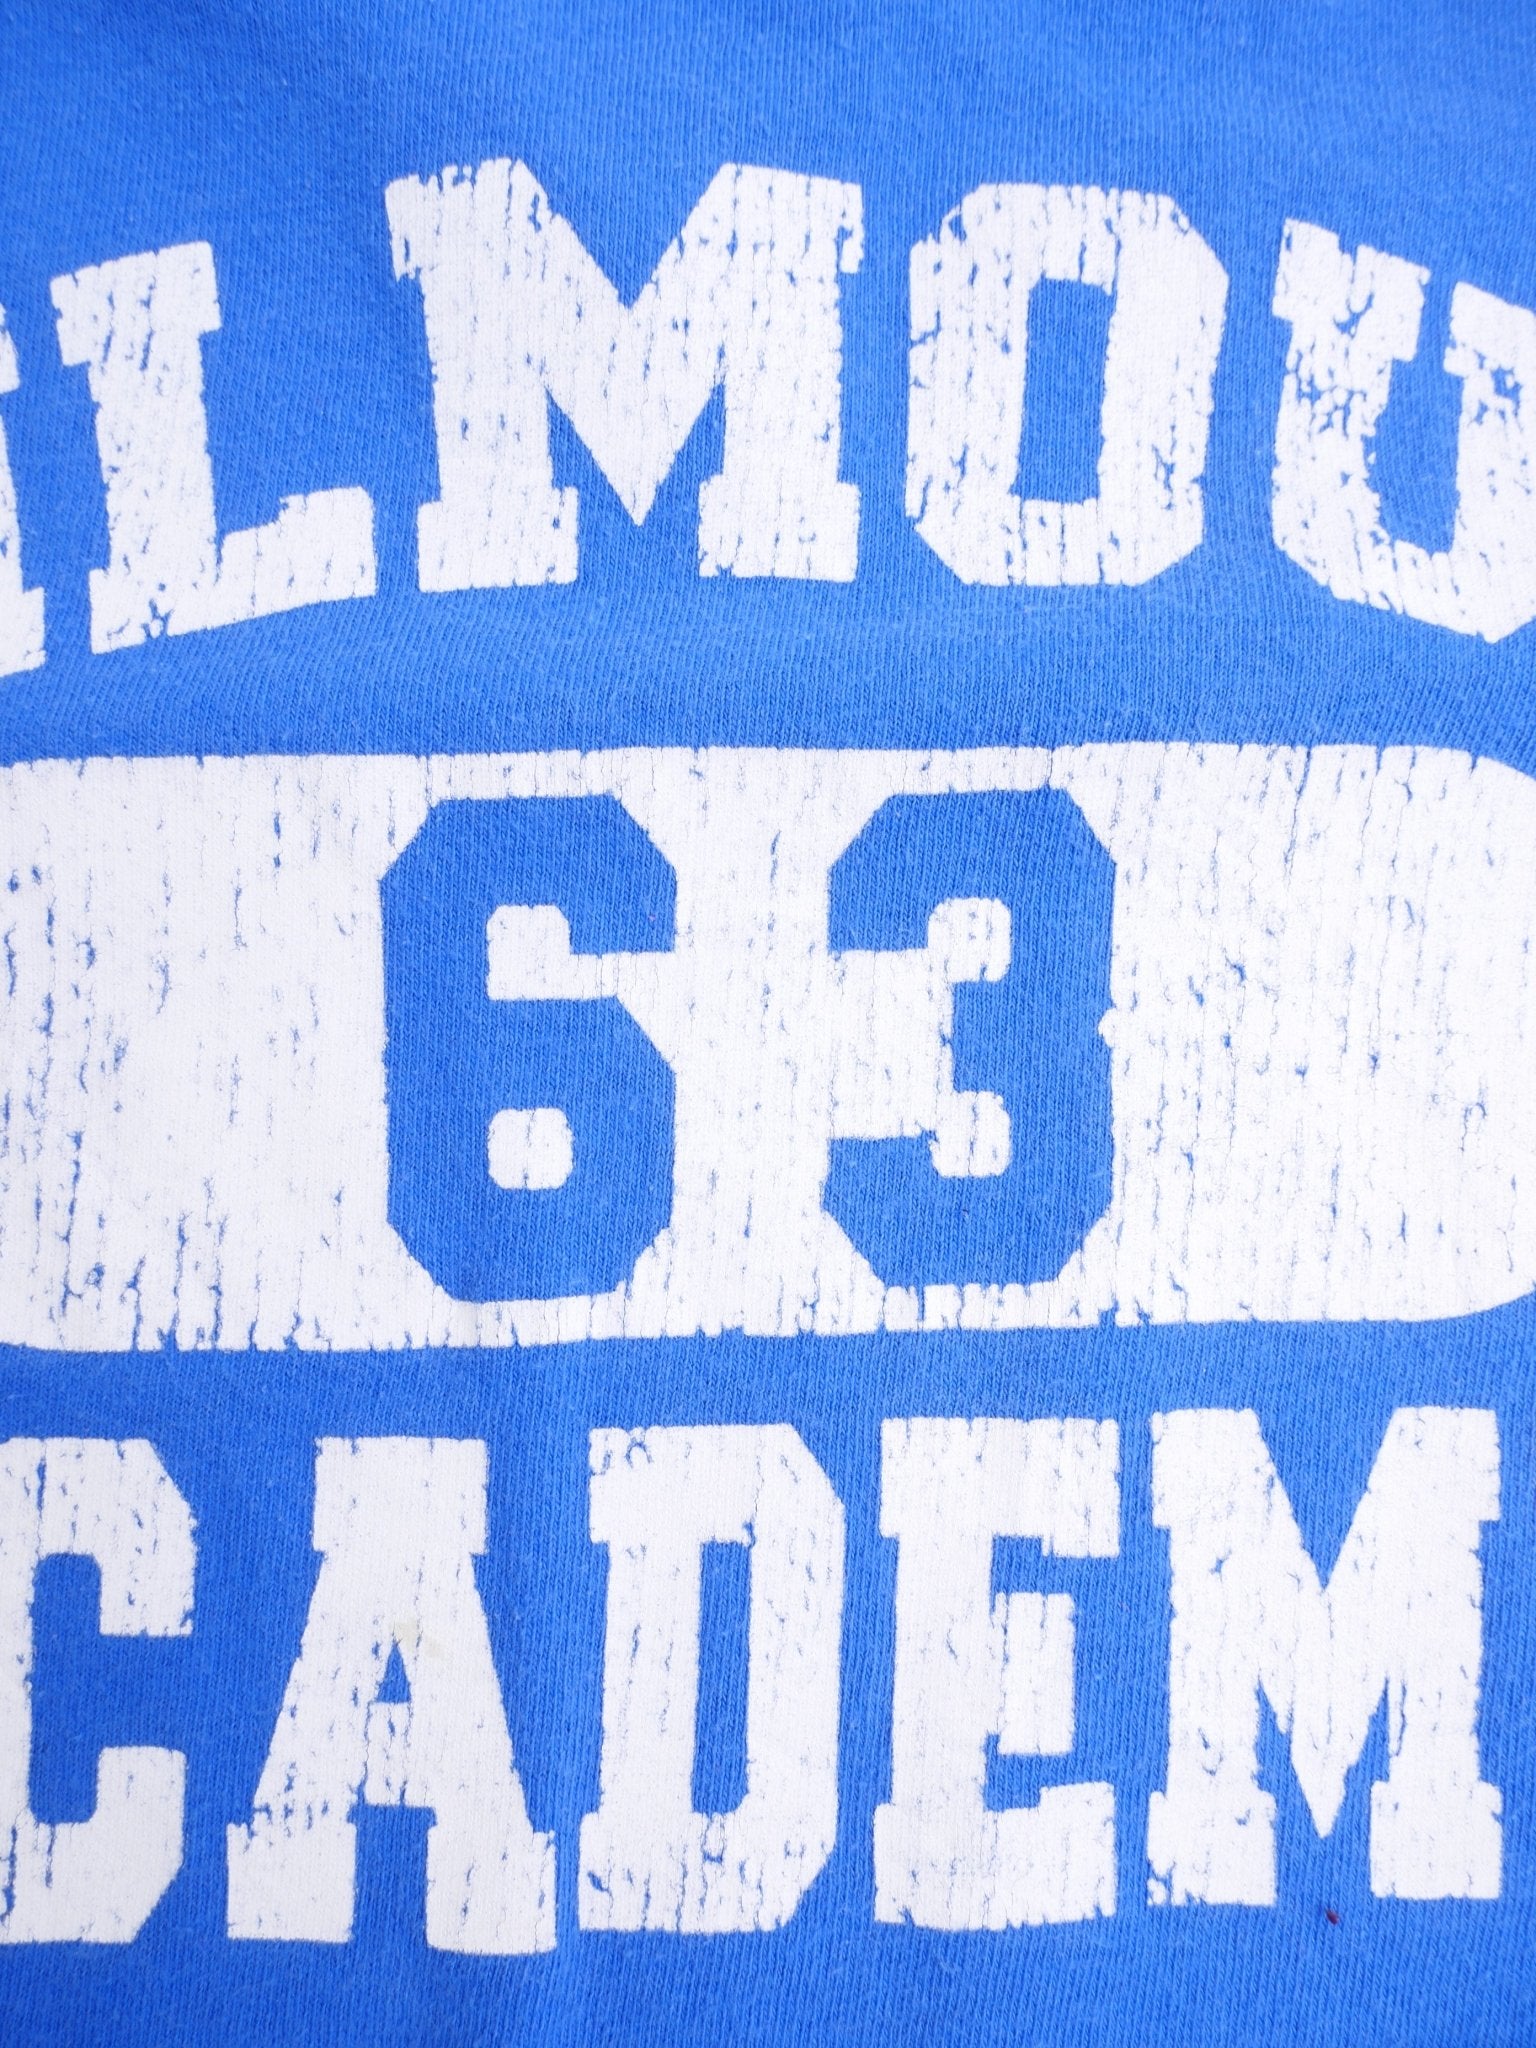 Delta printed Dilmour Academy blue Shirt - Peeces